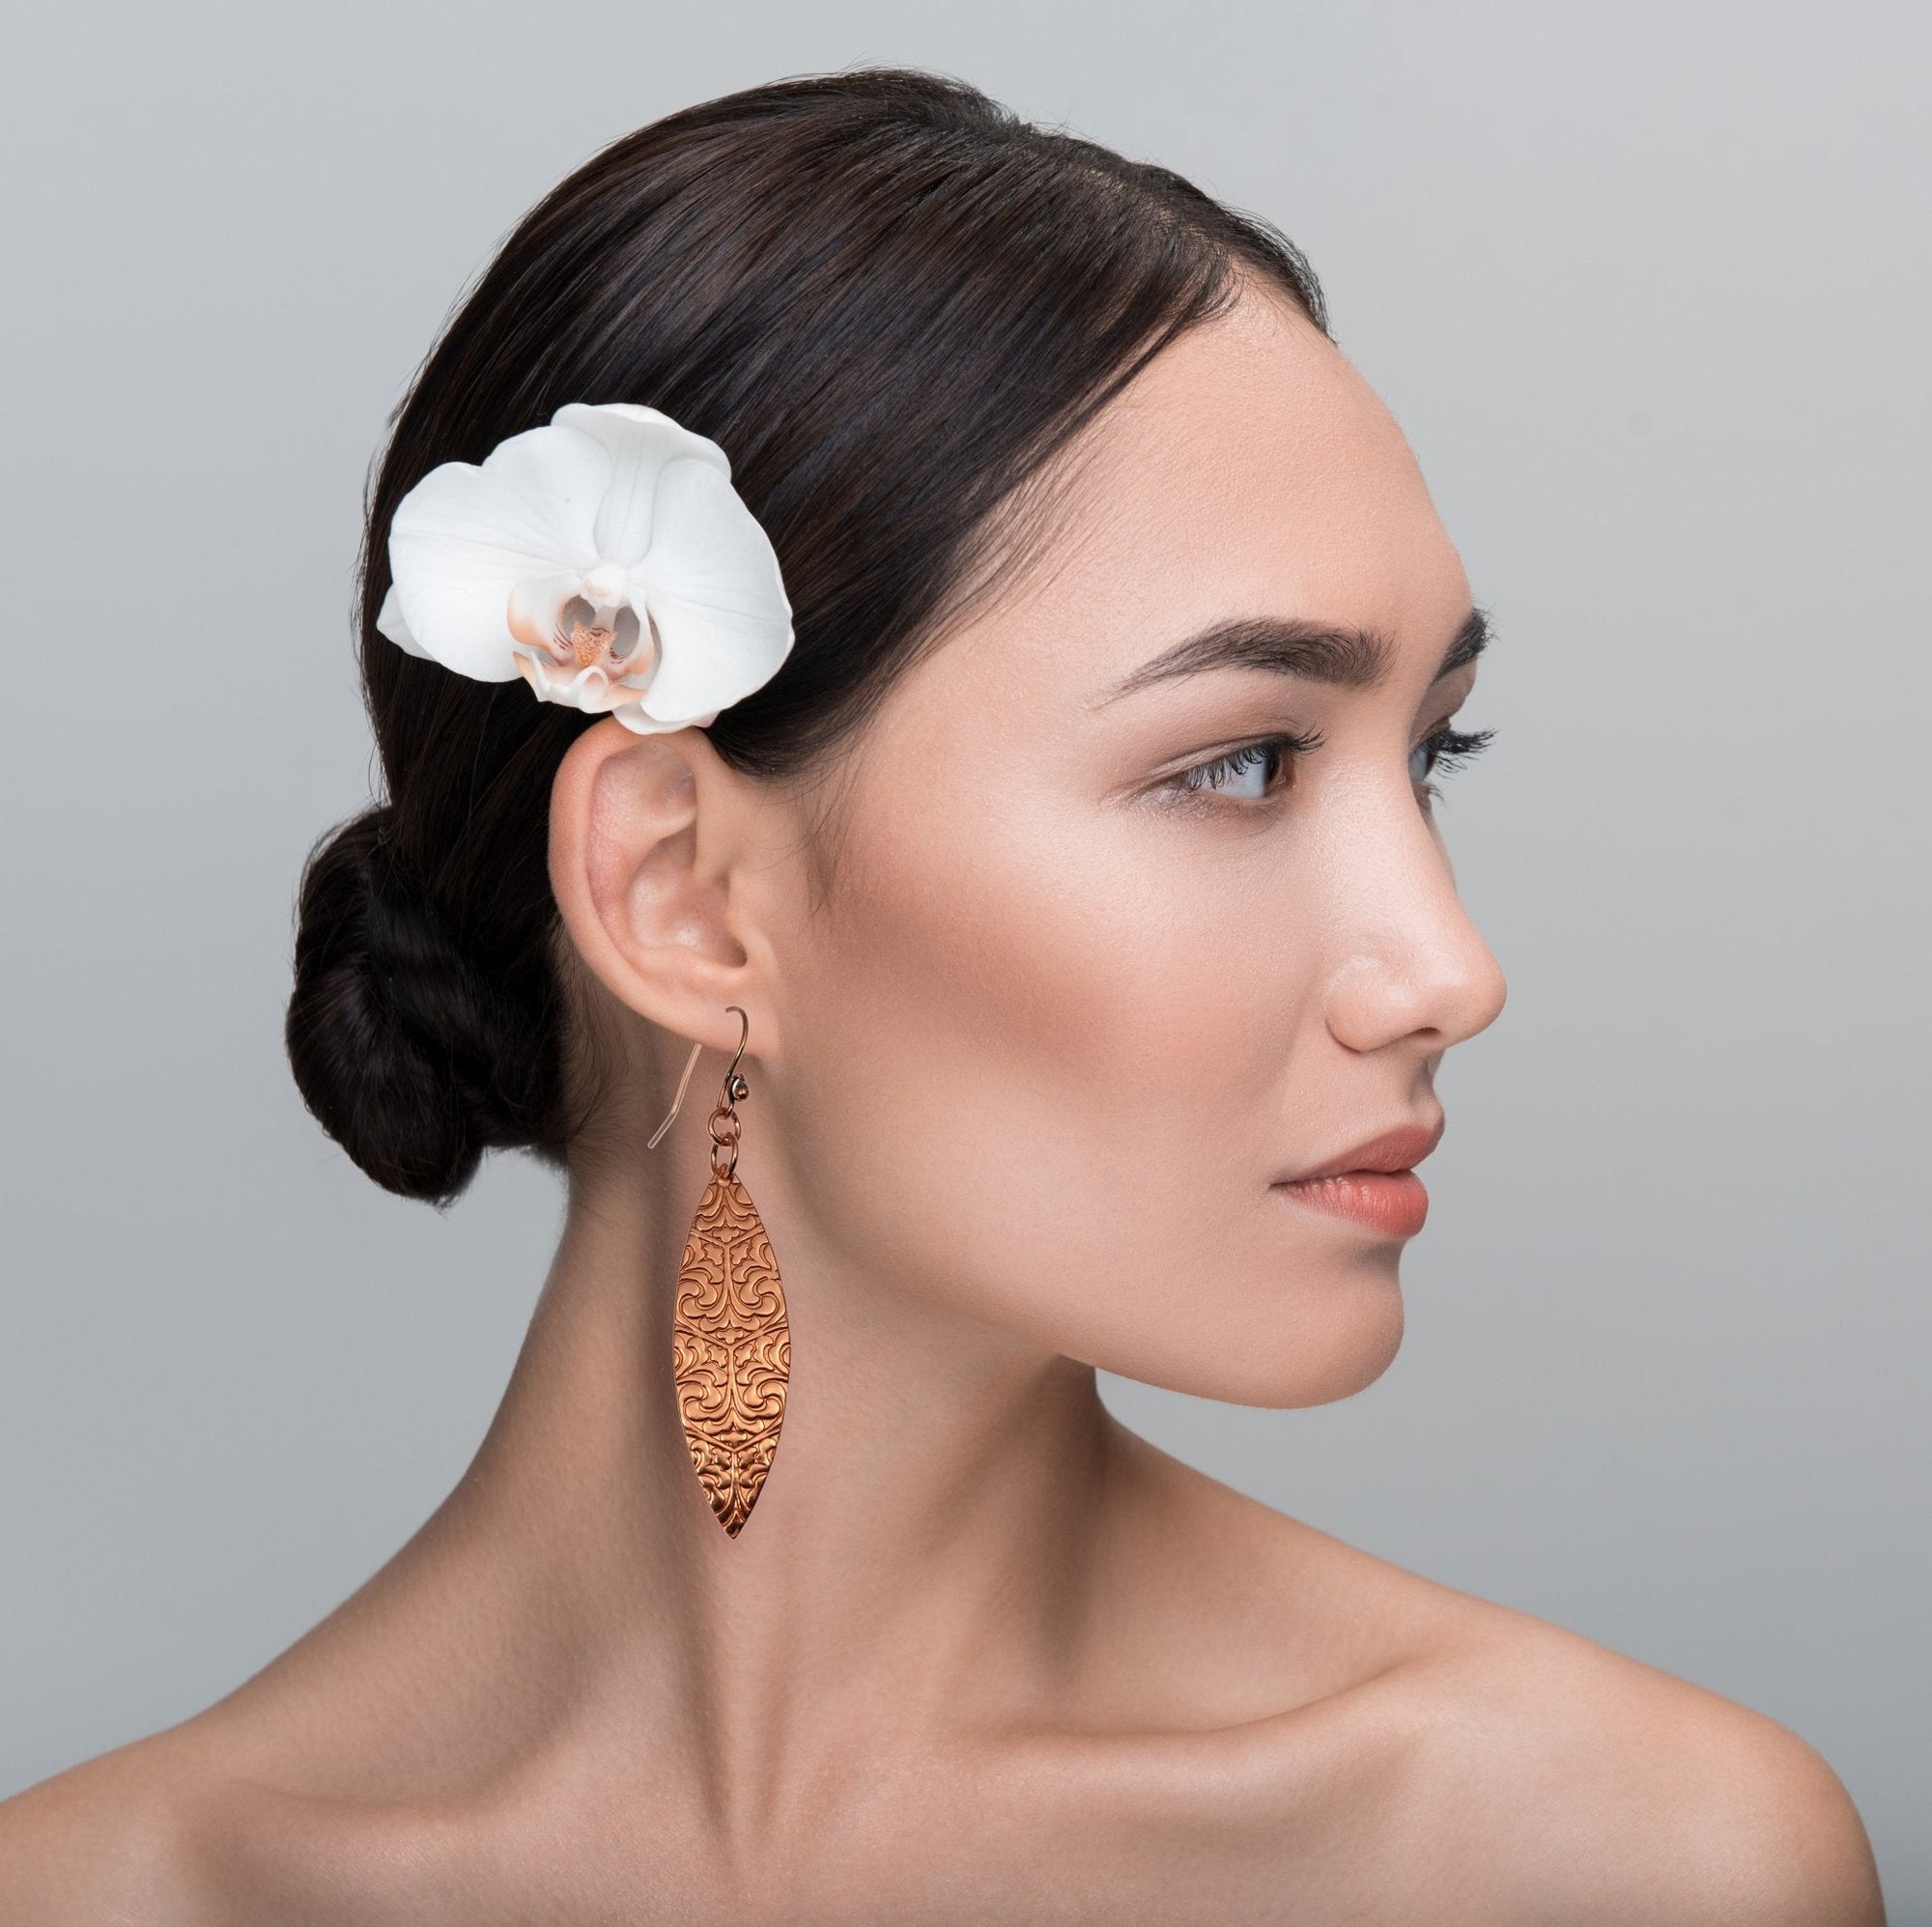 Damask Embossed Copper Marquise Earrings on Female Model